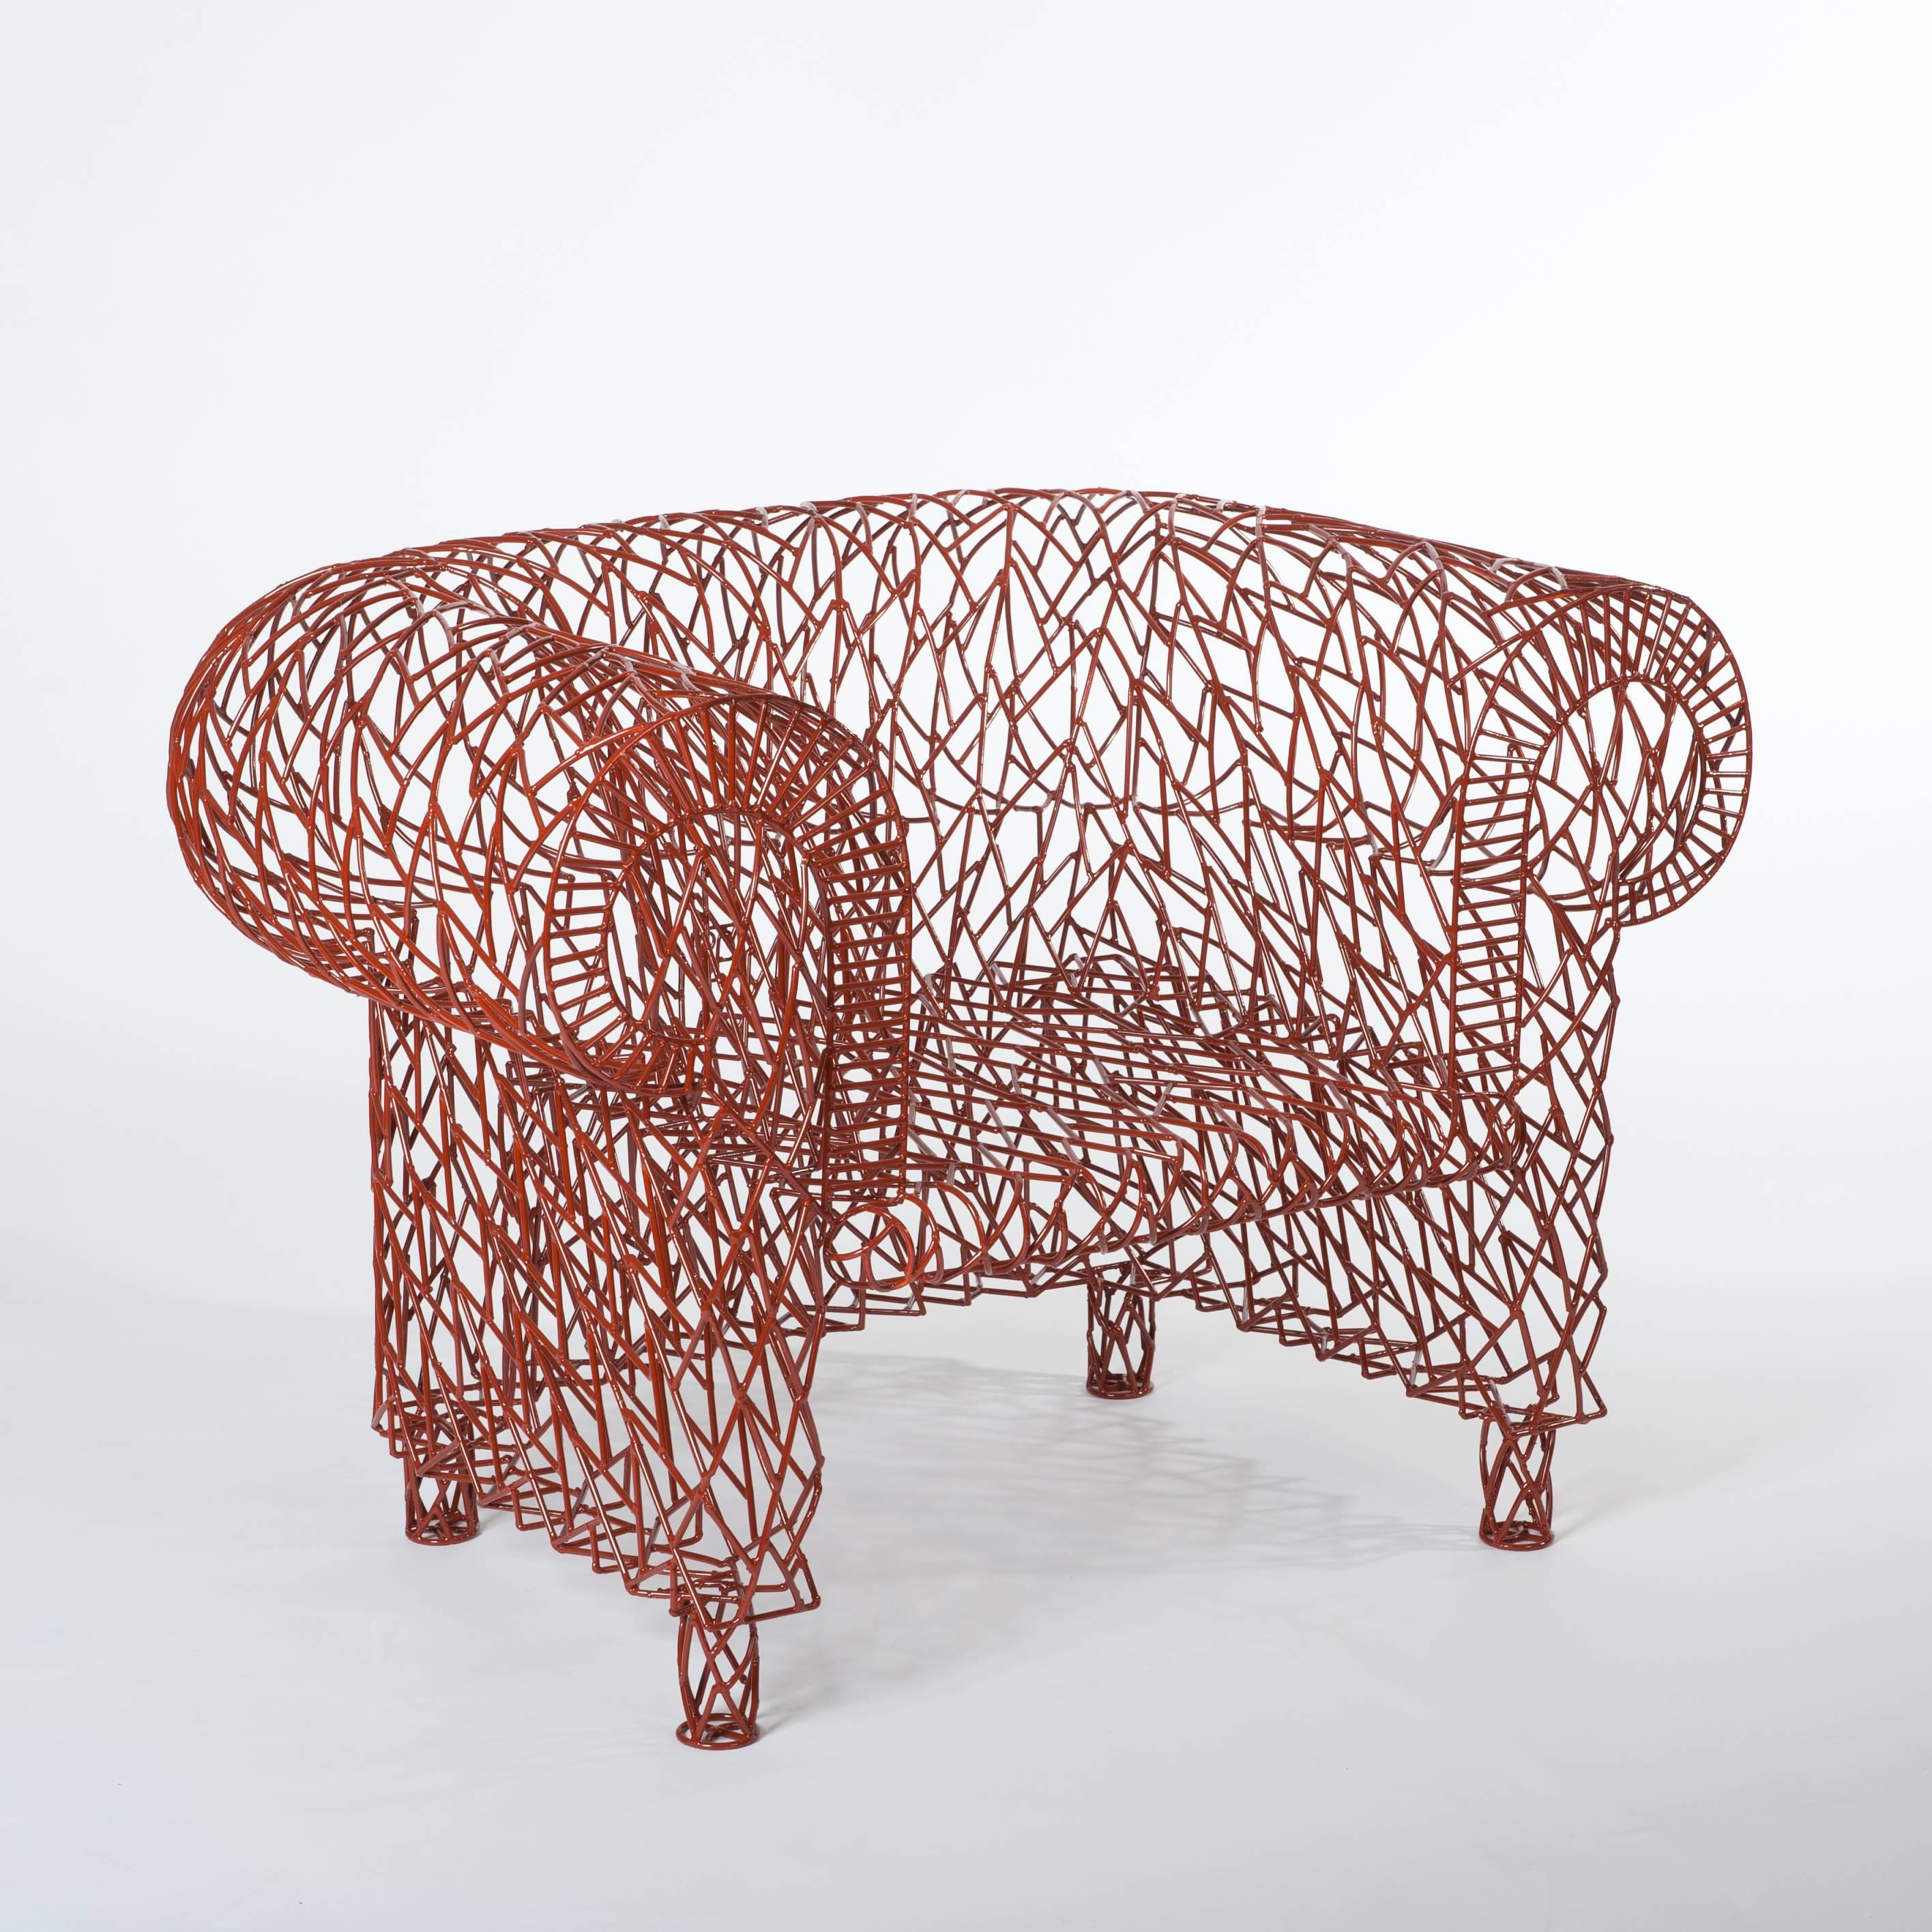 Moderner Sessel aus geschweißter Konstruktion, rot lackiert von A. Spazzapan, signiert (Italienisch)